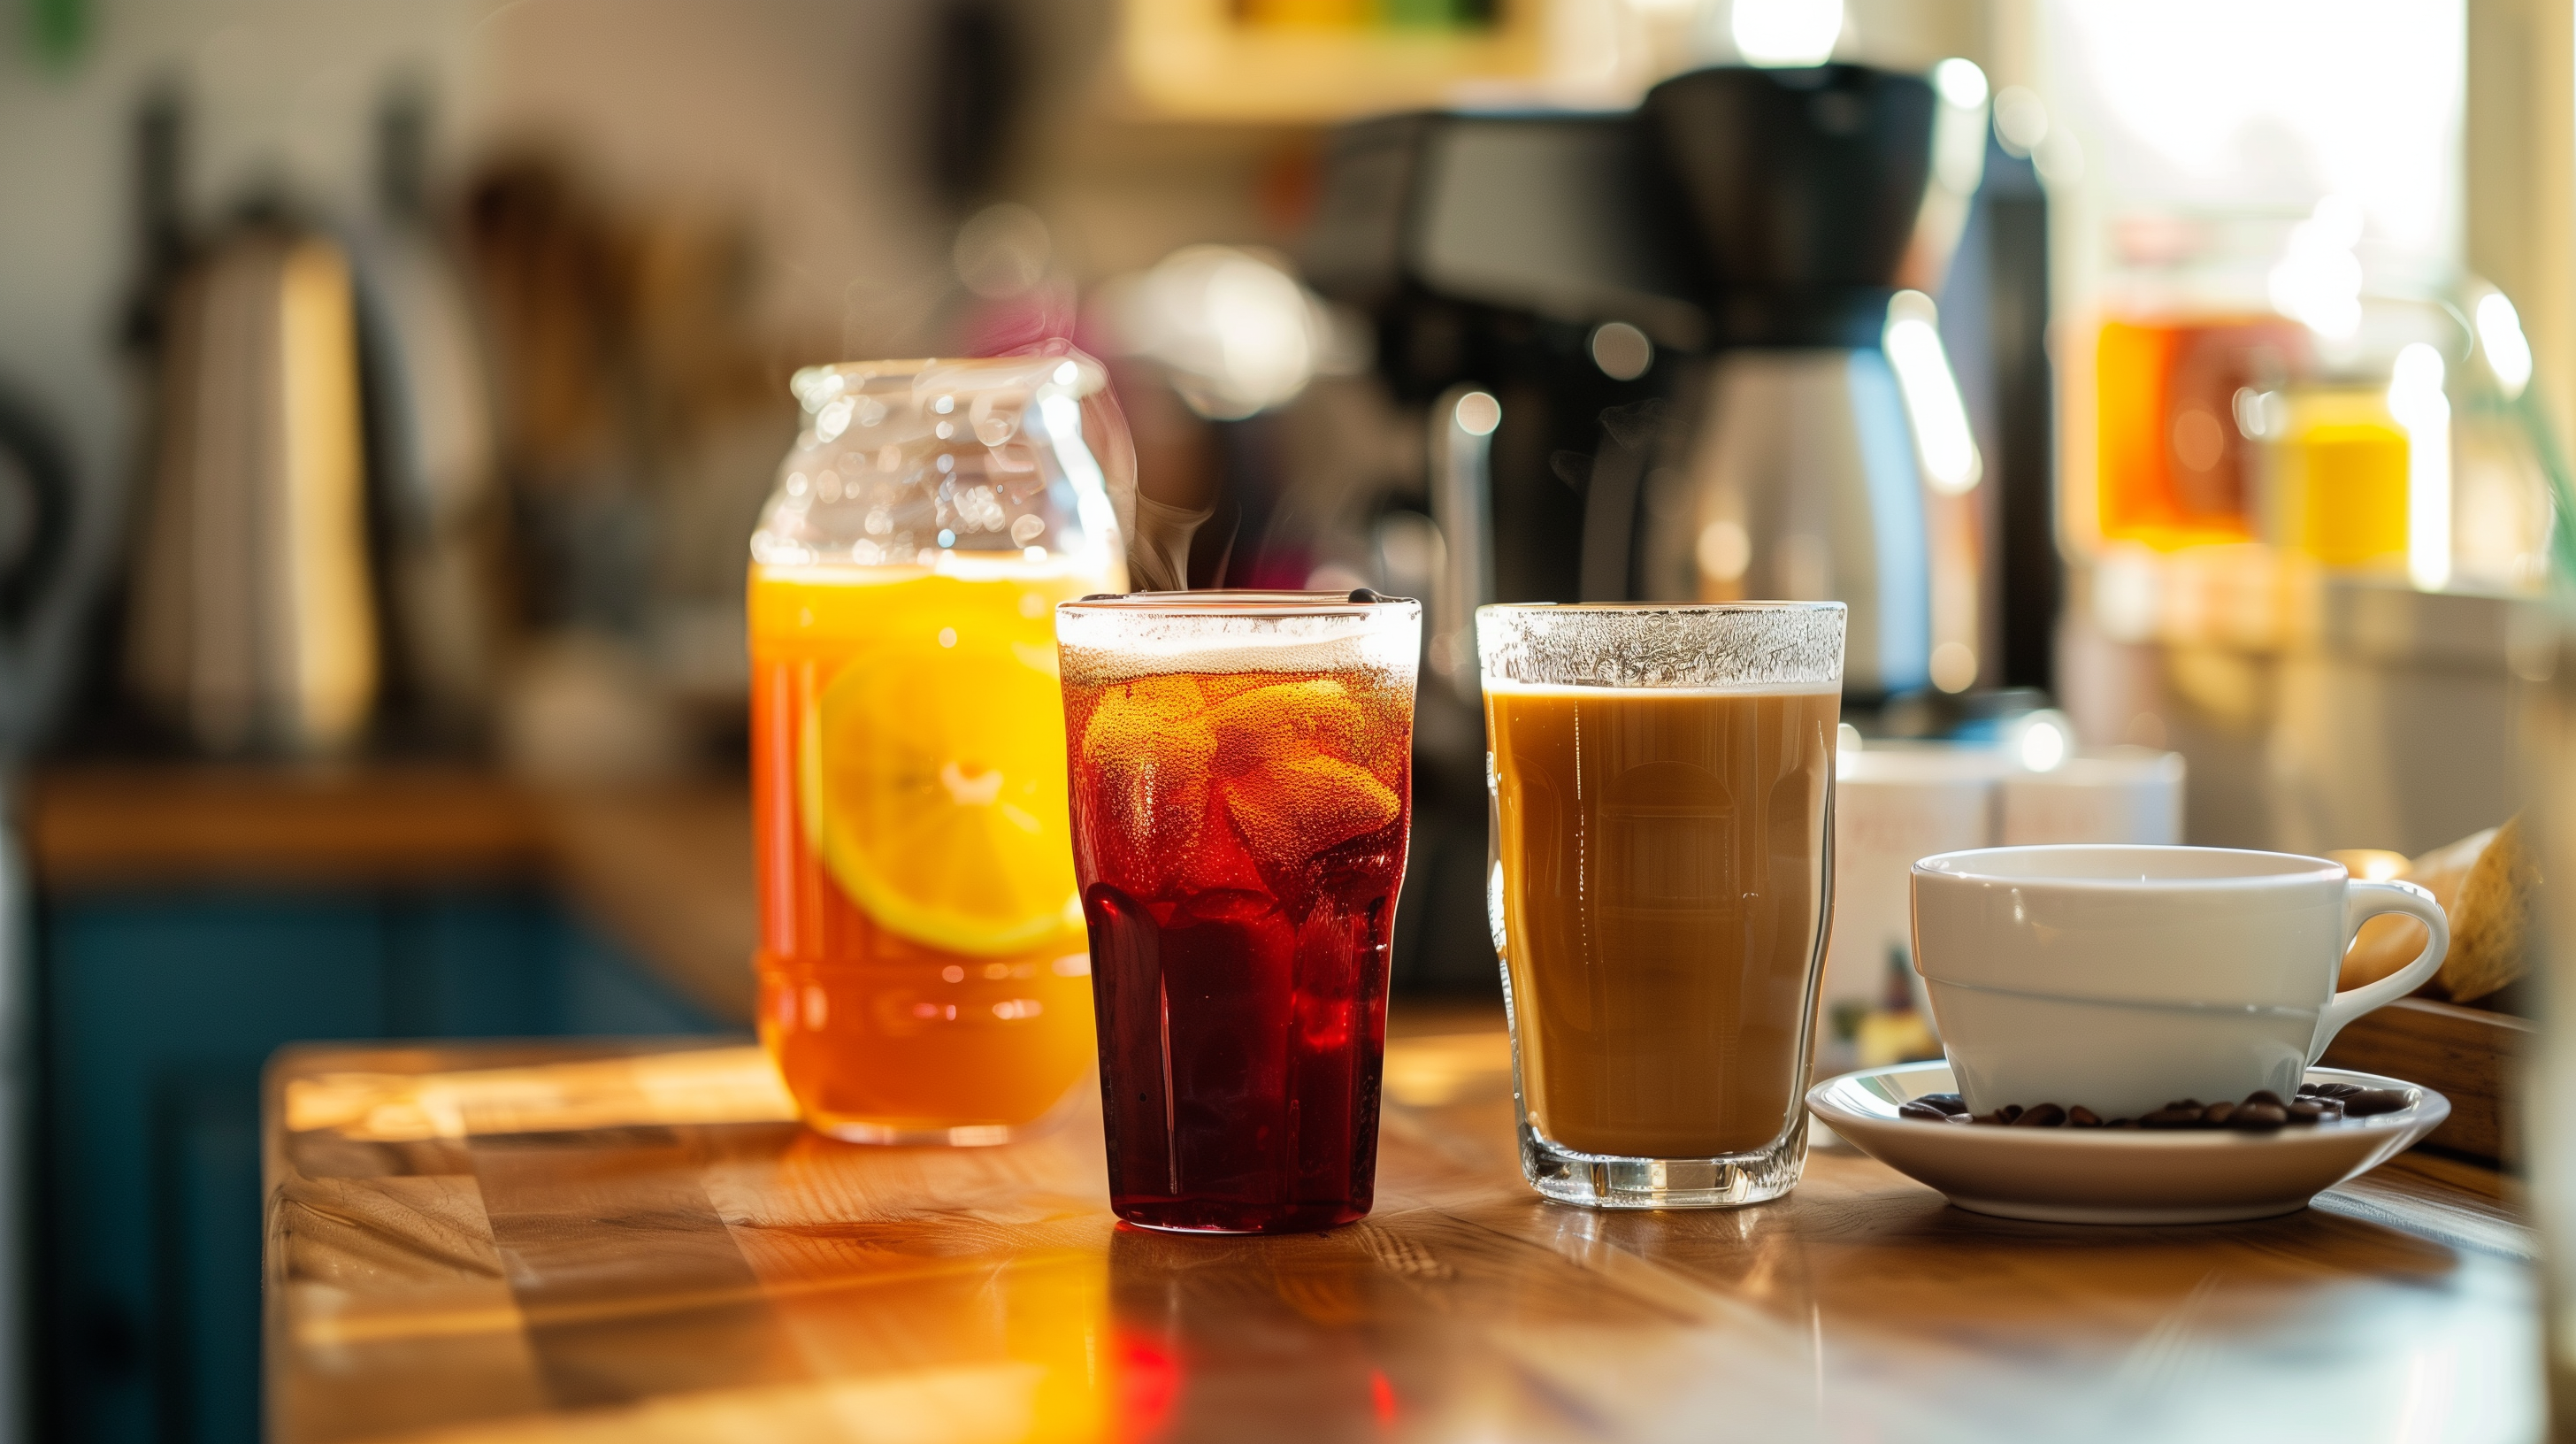 caffeine drinks, coffee, energy drinks, tea on a counter